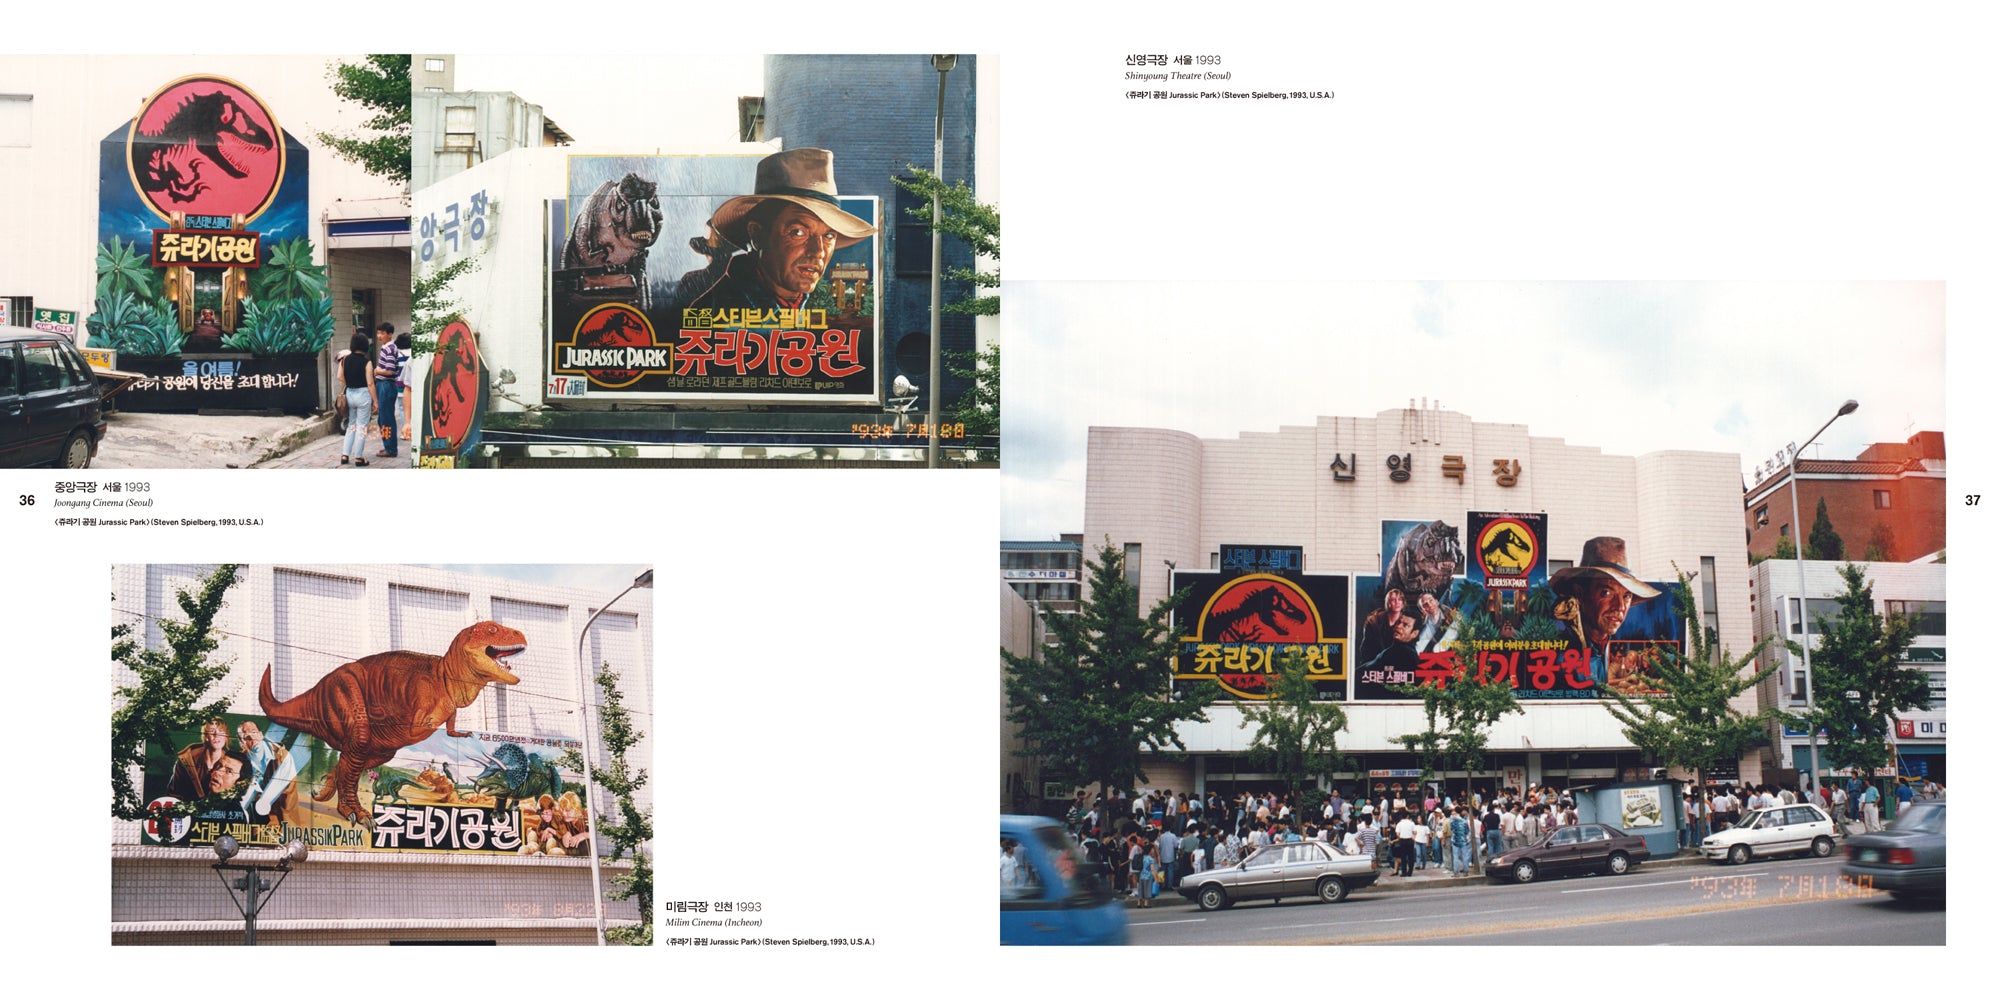 Painted Cinema Billboards